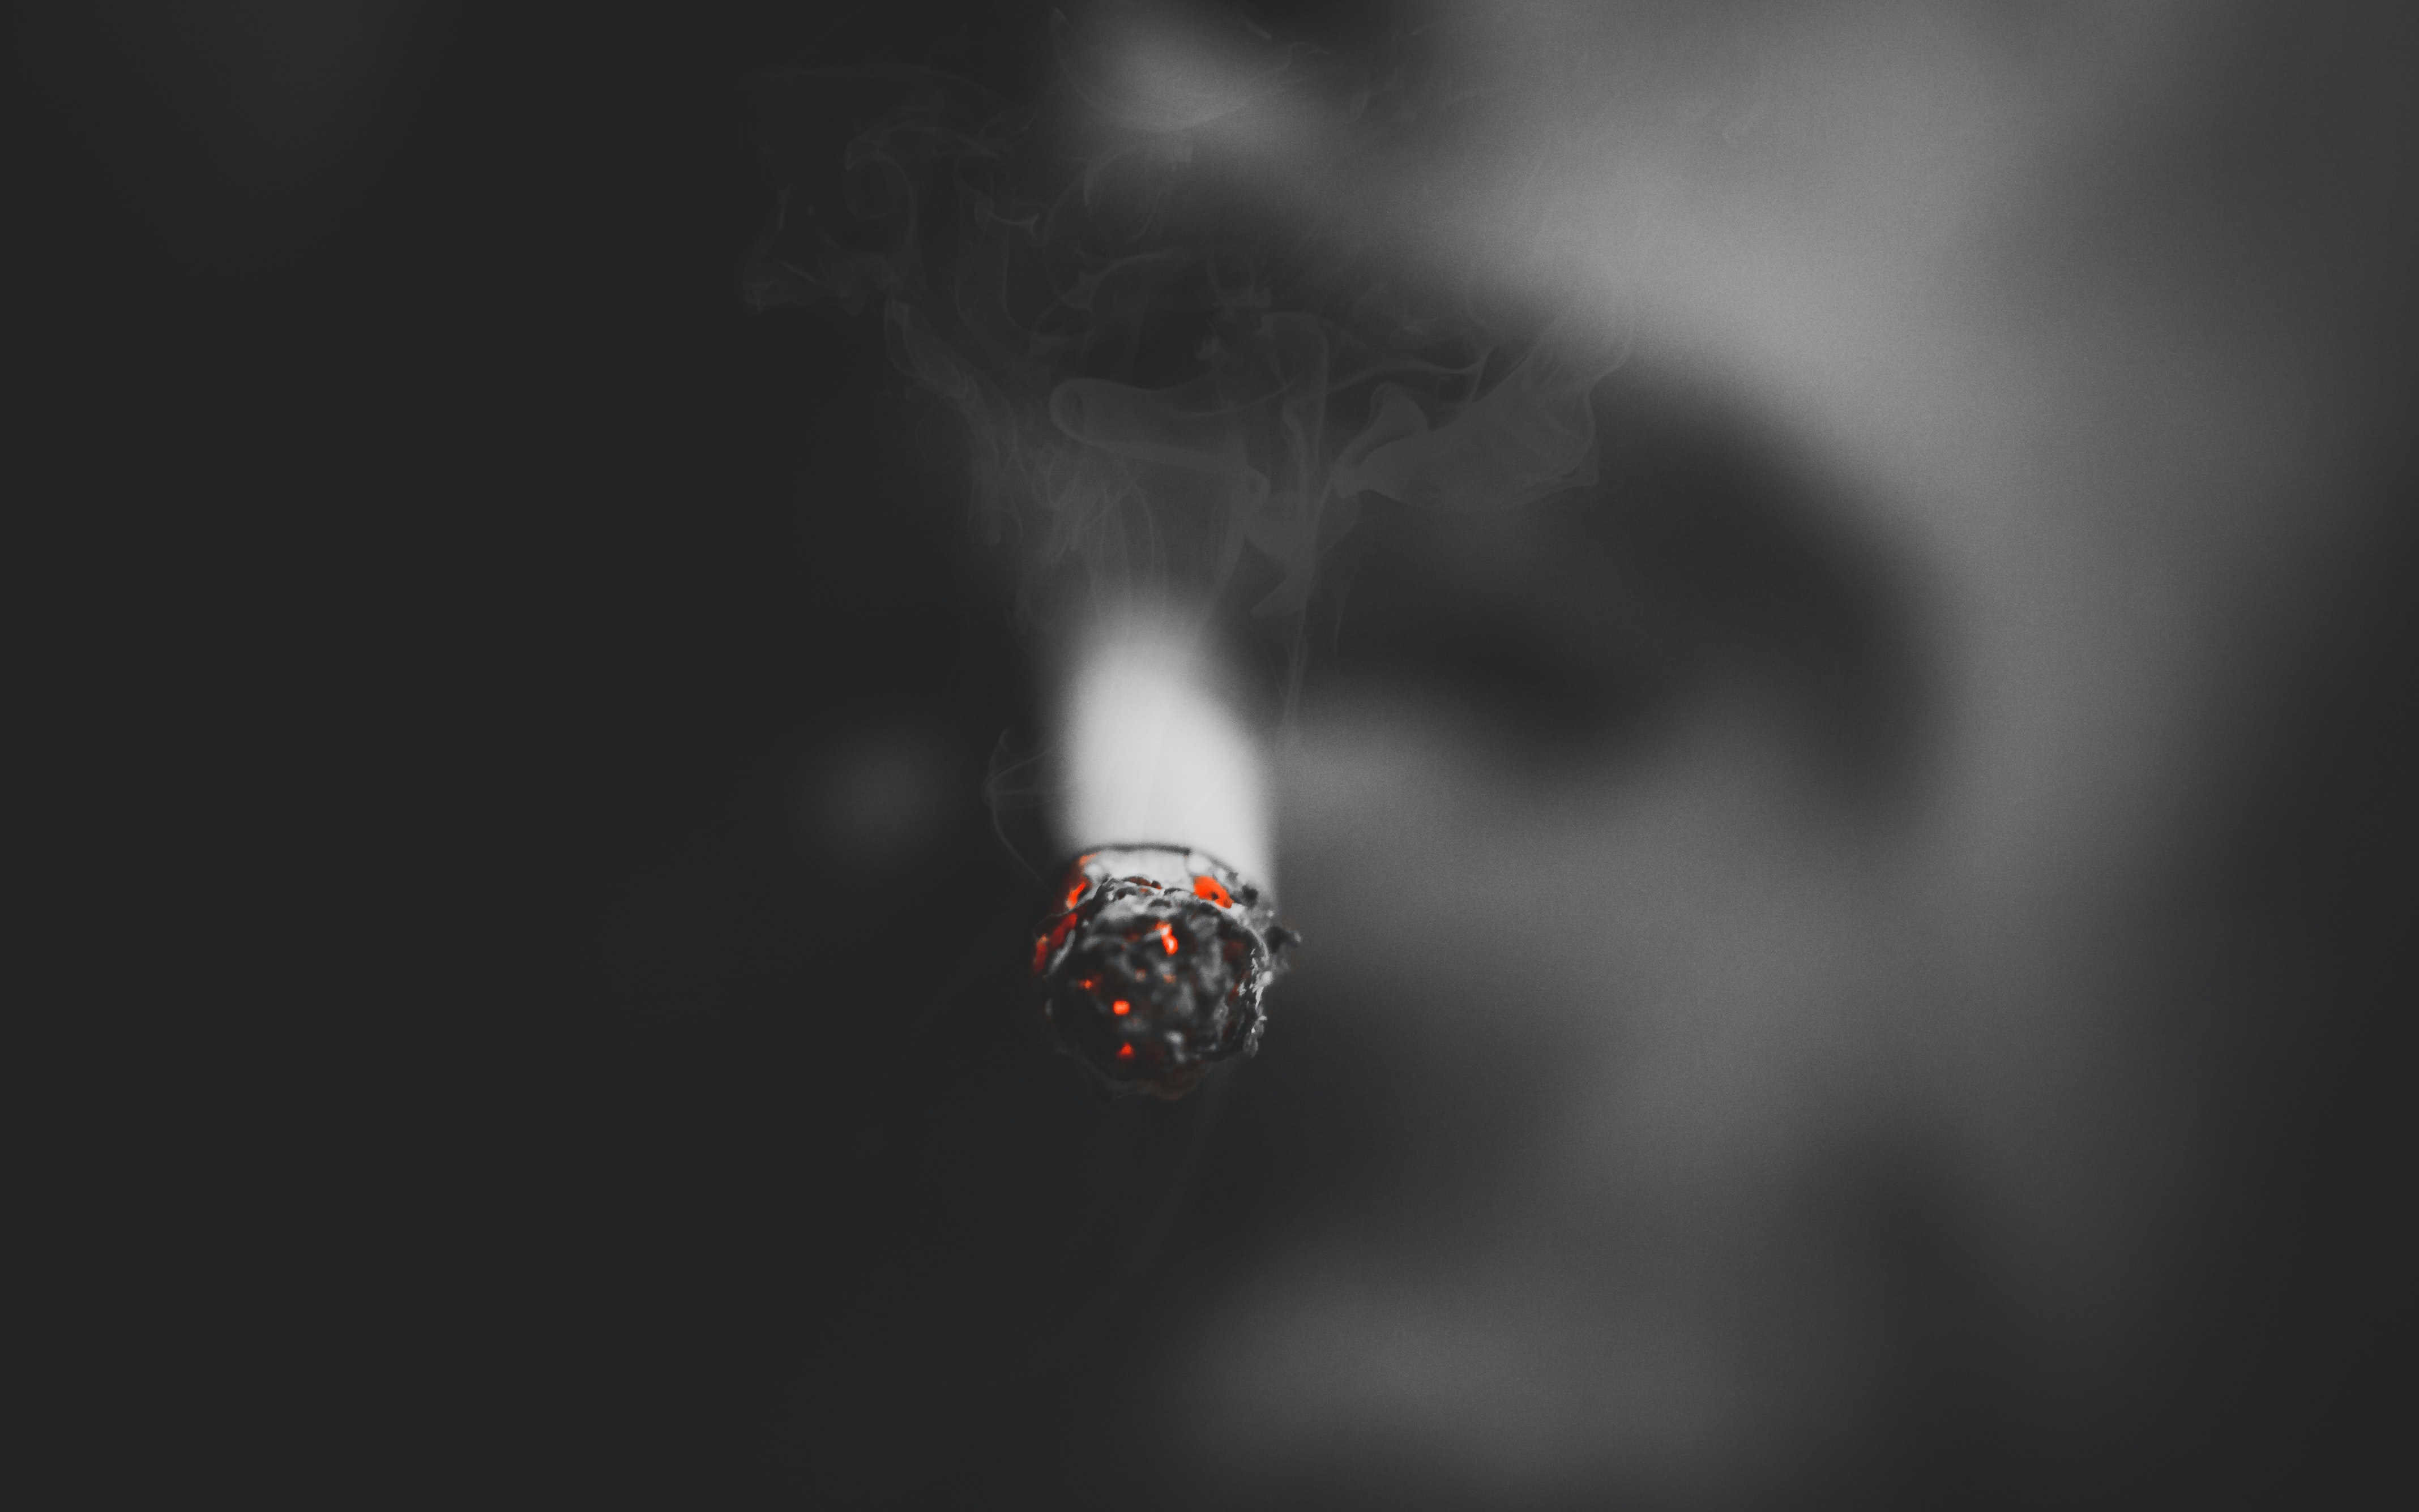 Сигарета мелькнула во тьме. Рука из дыма. Тьма дым. Дым сигареты во тьме. Сигарета дымится во тьме.